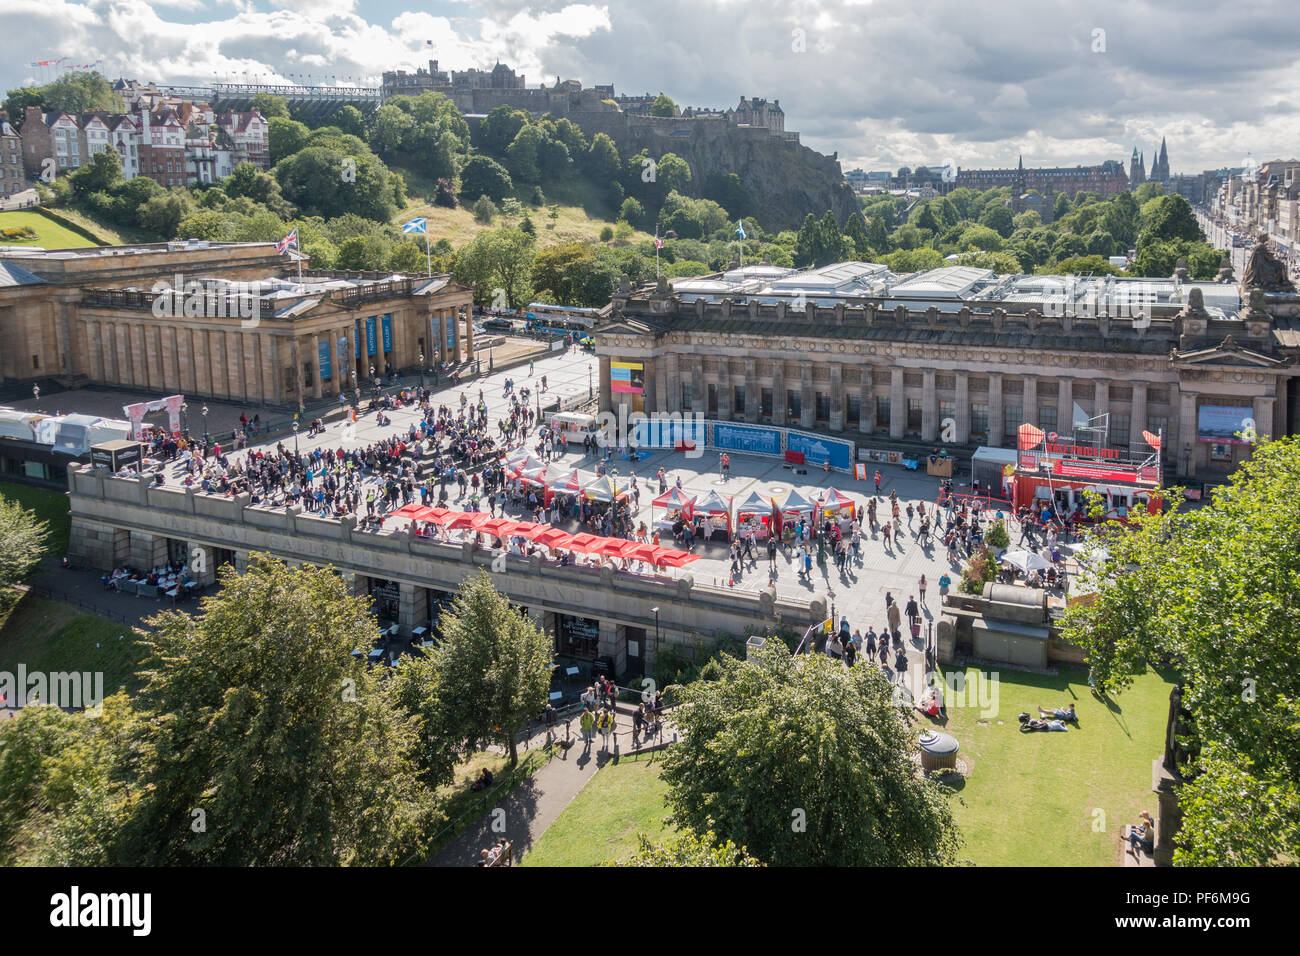 The Mound, Edinburgh, with The Scottish National Gallery and Royal Scottish Academy during the Edinburgh Fringe Festival Stock Photo